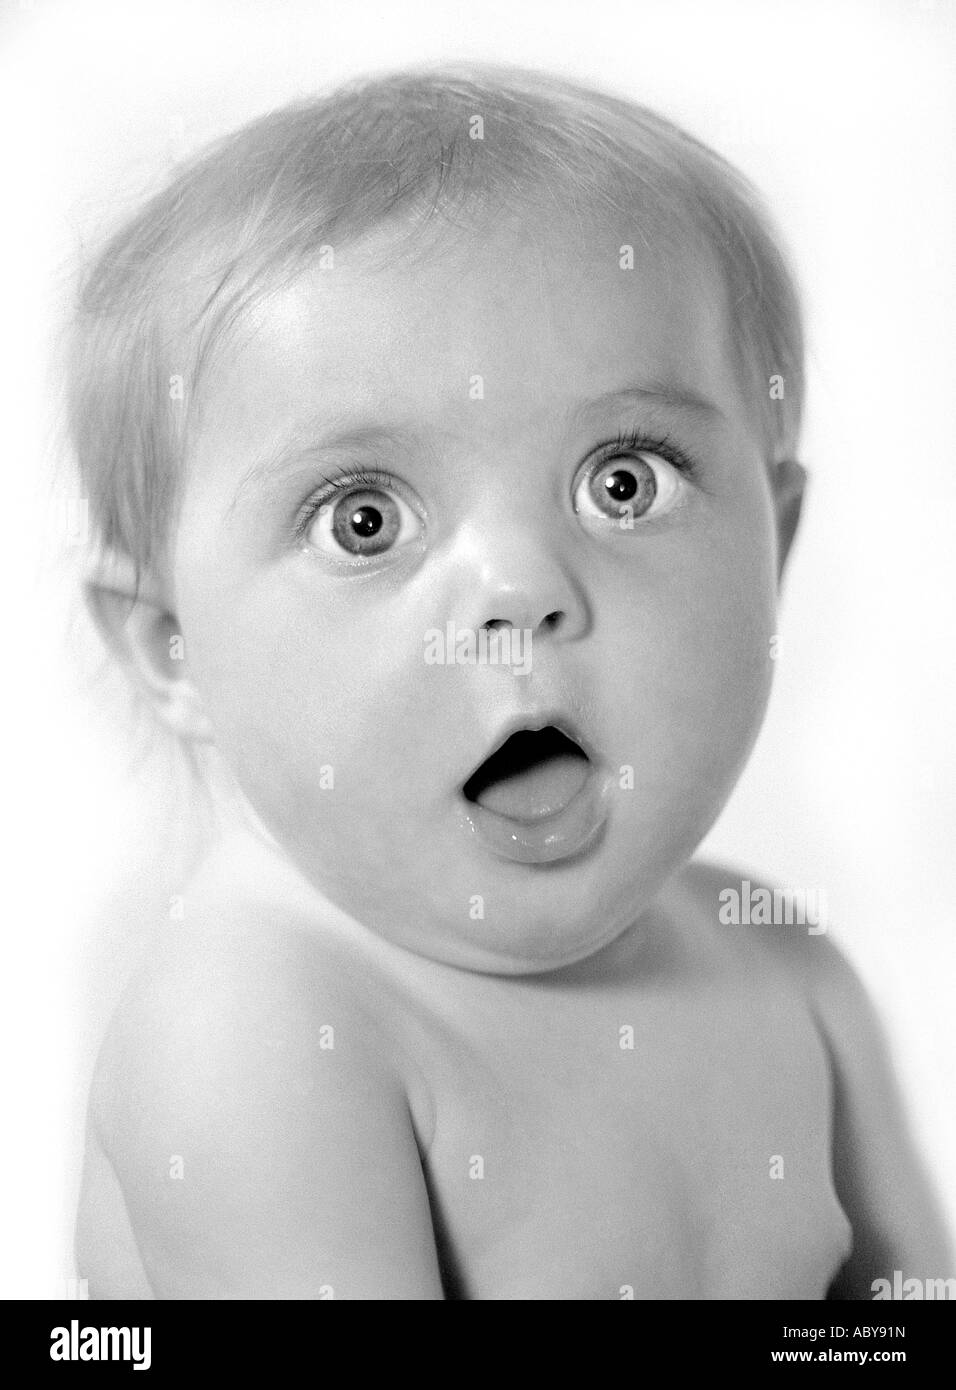 amazed-babyface-child-expression-oh-wow-ah-big-eyes-monochrome-ABY91N.jpg